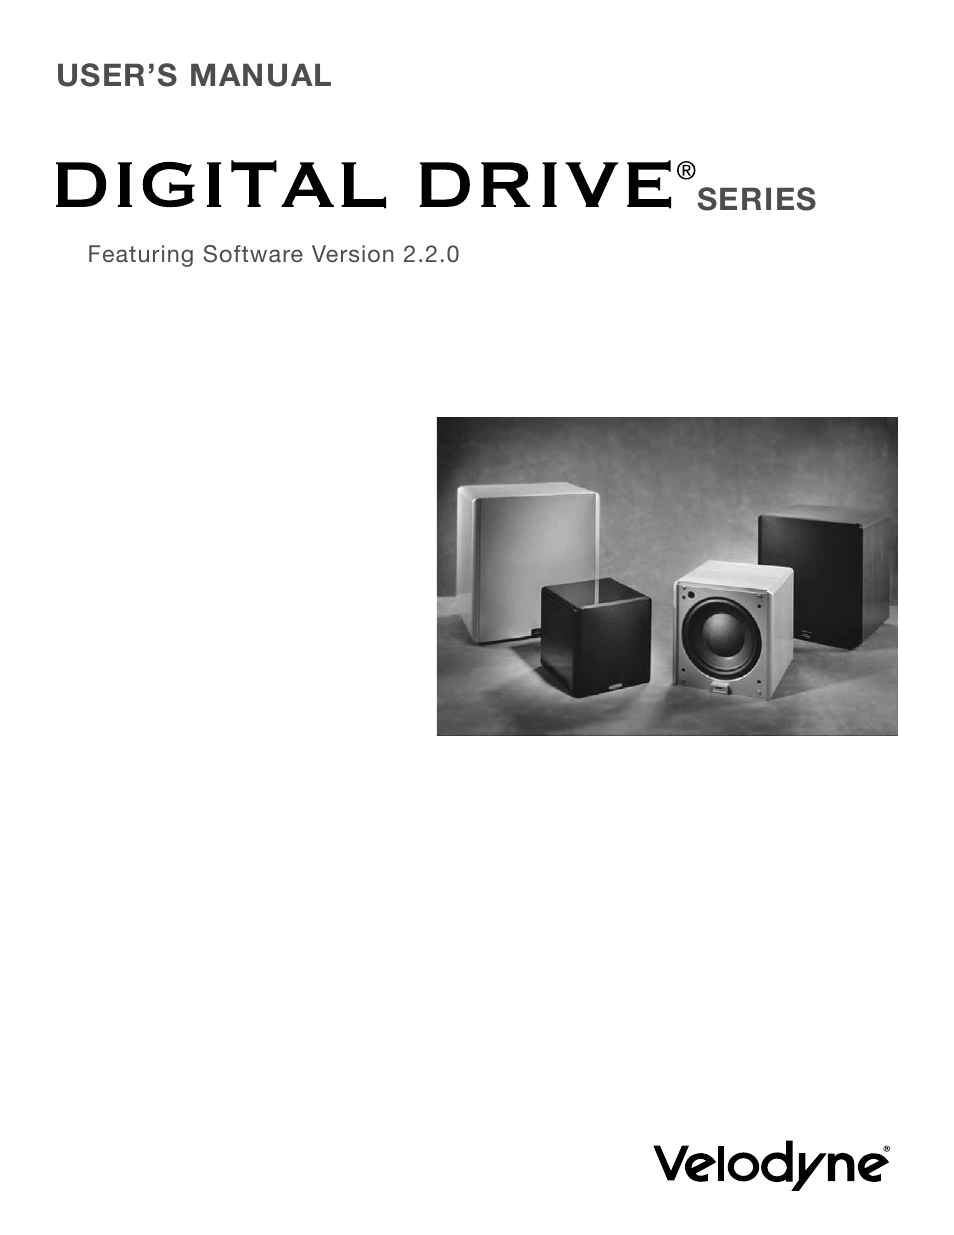 Digital Drive Series